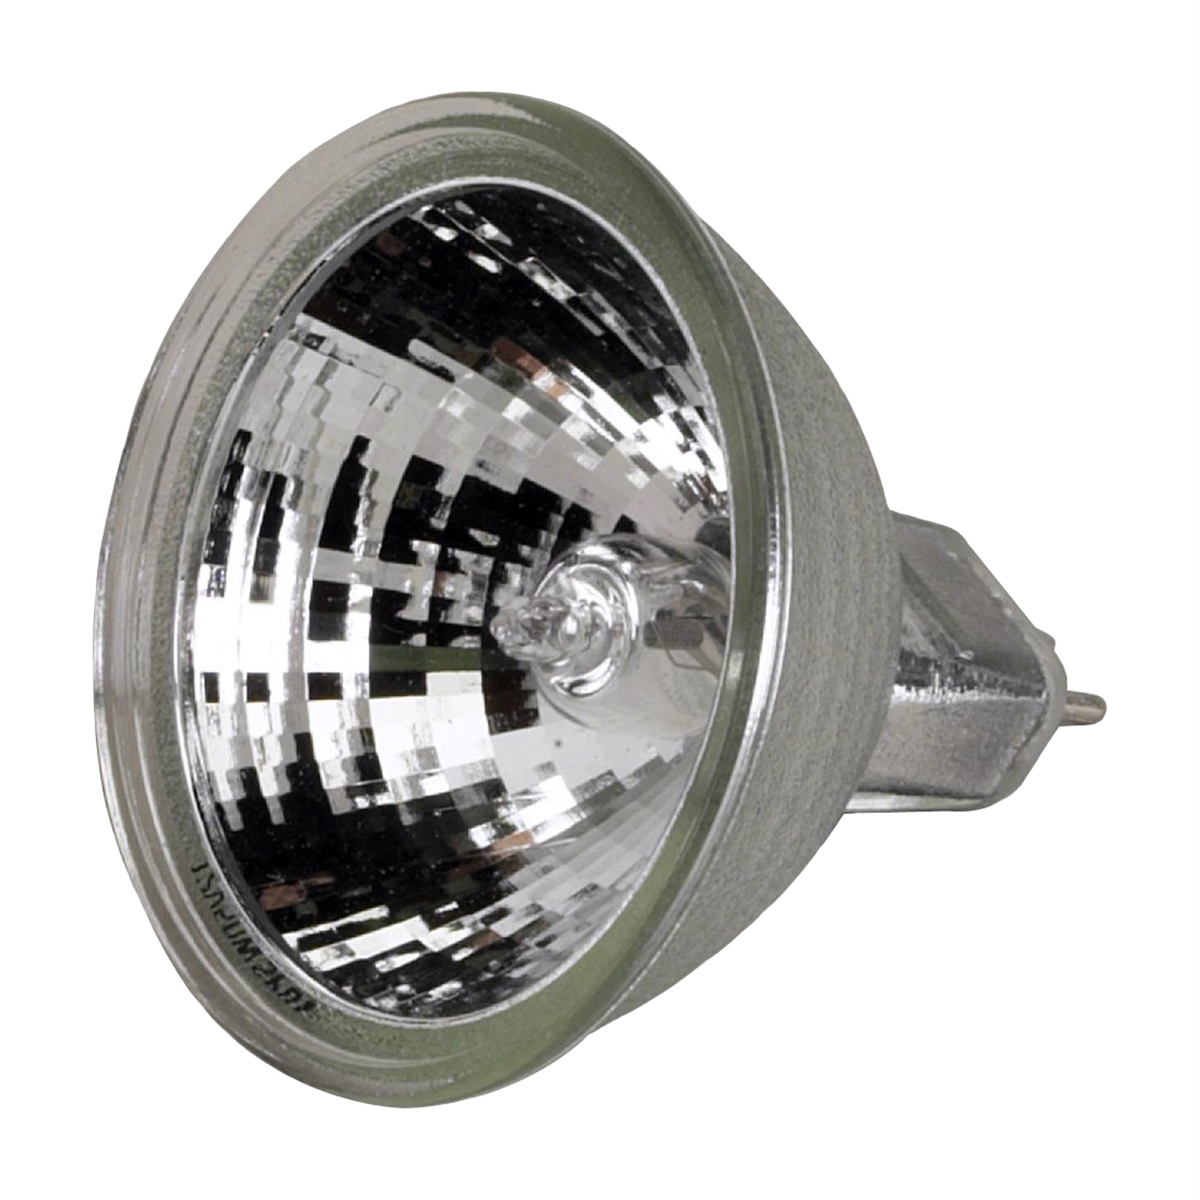 UV Lamp Replacement 60 watt Bulb